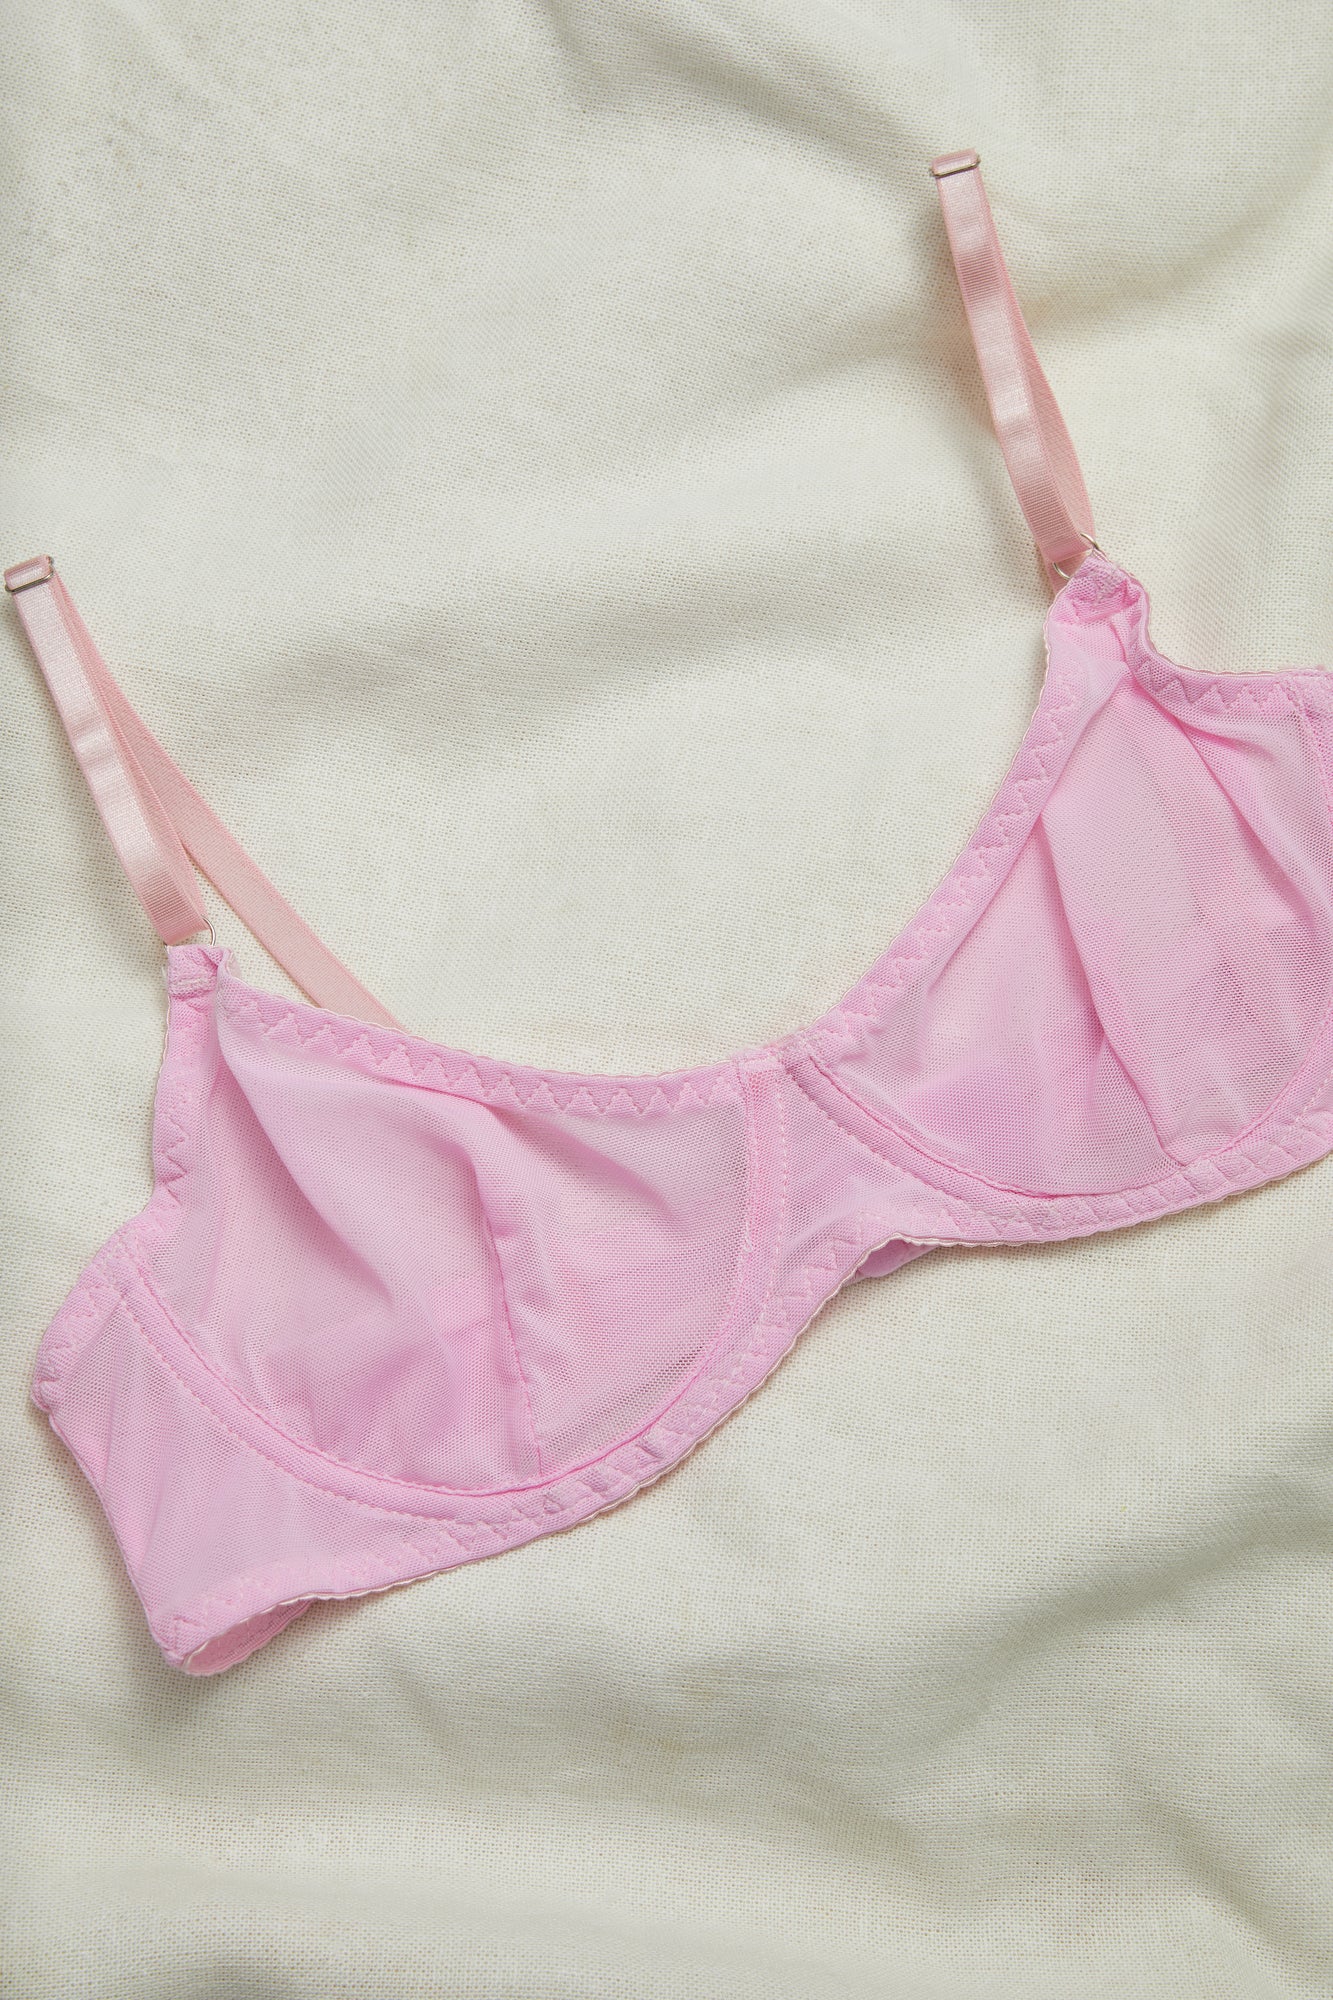 buy lingerie online, sheer bra and panty set